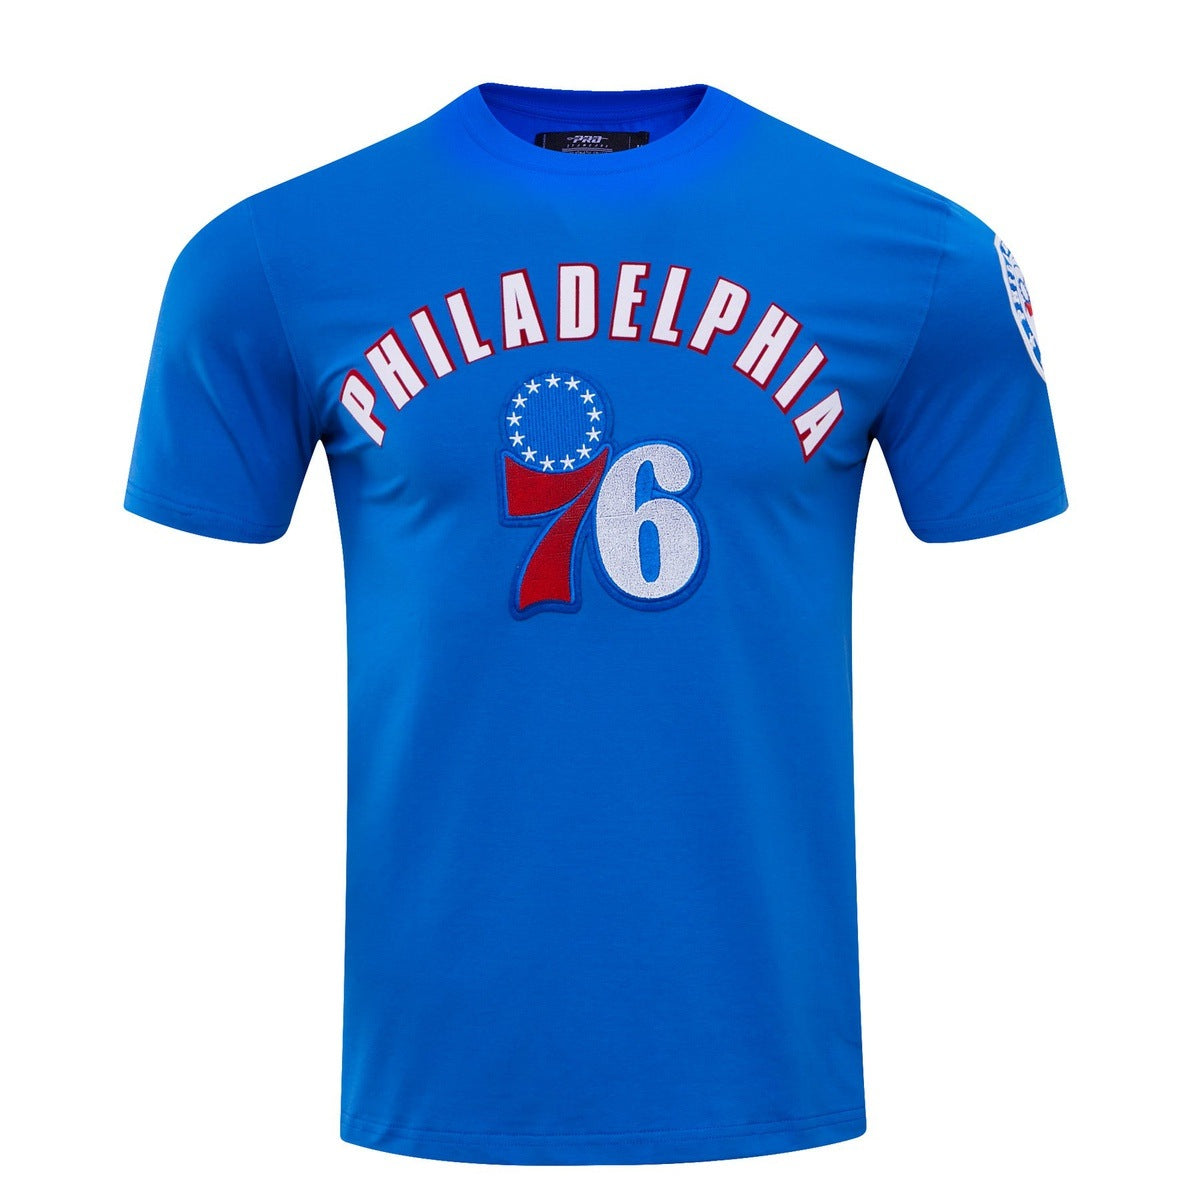 NBA PHILADELPHIA 76ERS CLASSIC BRISTLE MEN´S TEE (ROYAL BLUE)